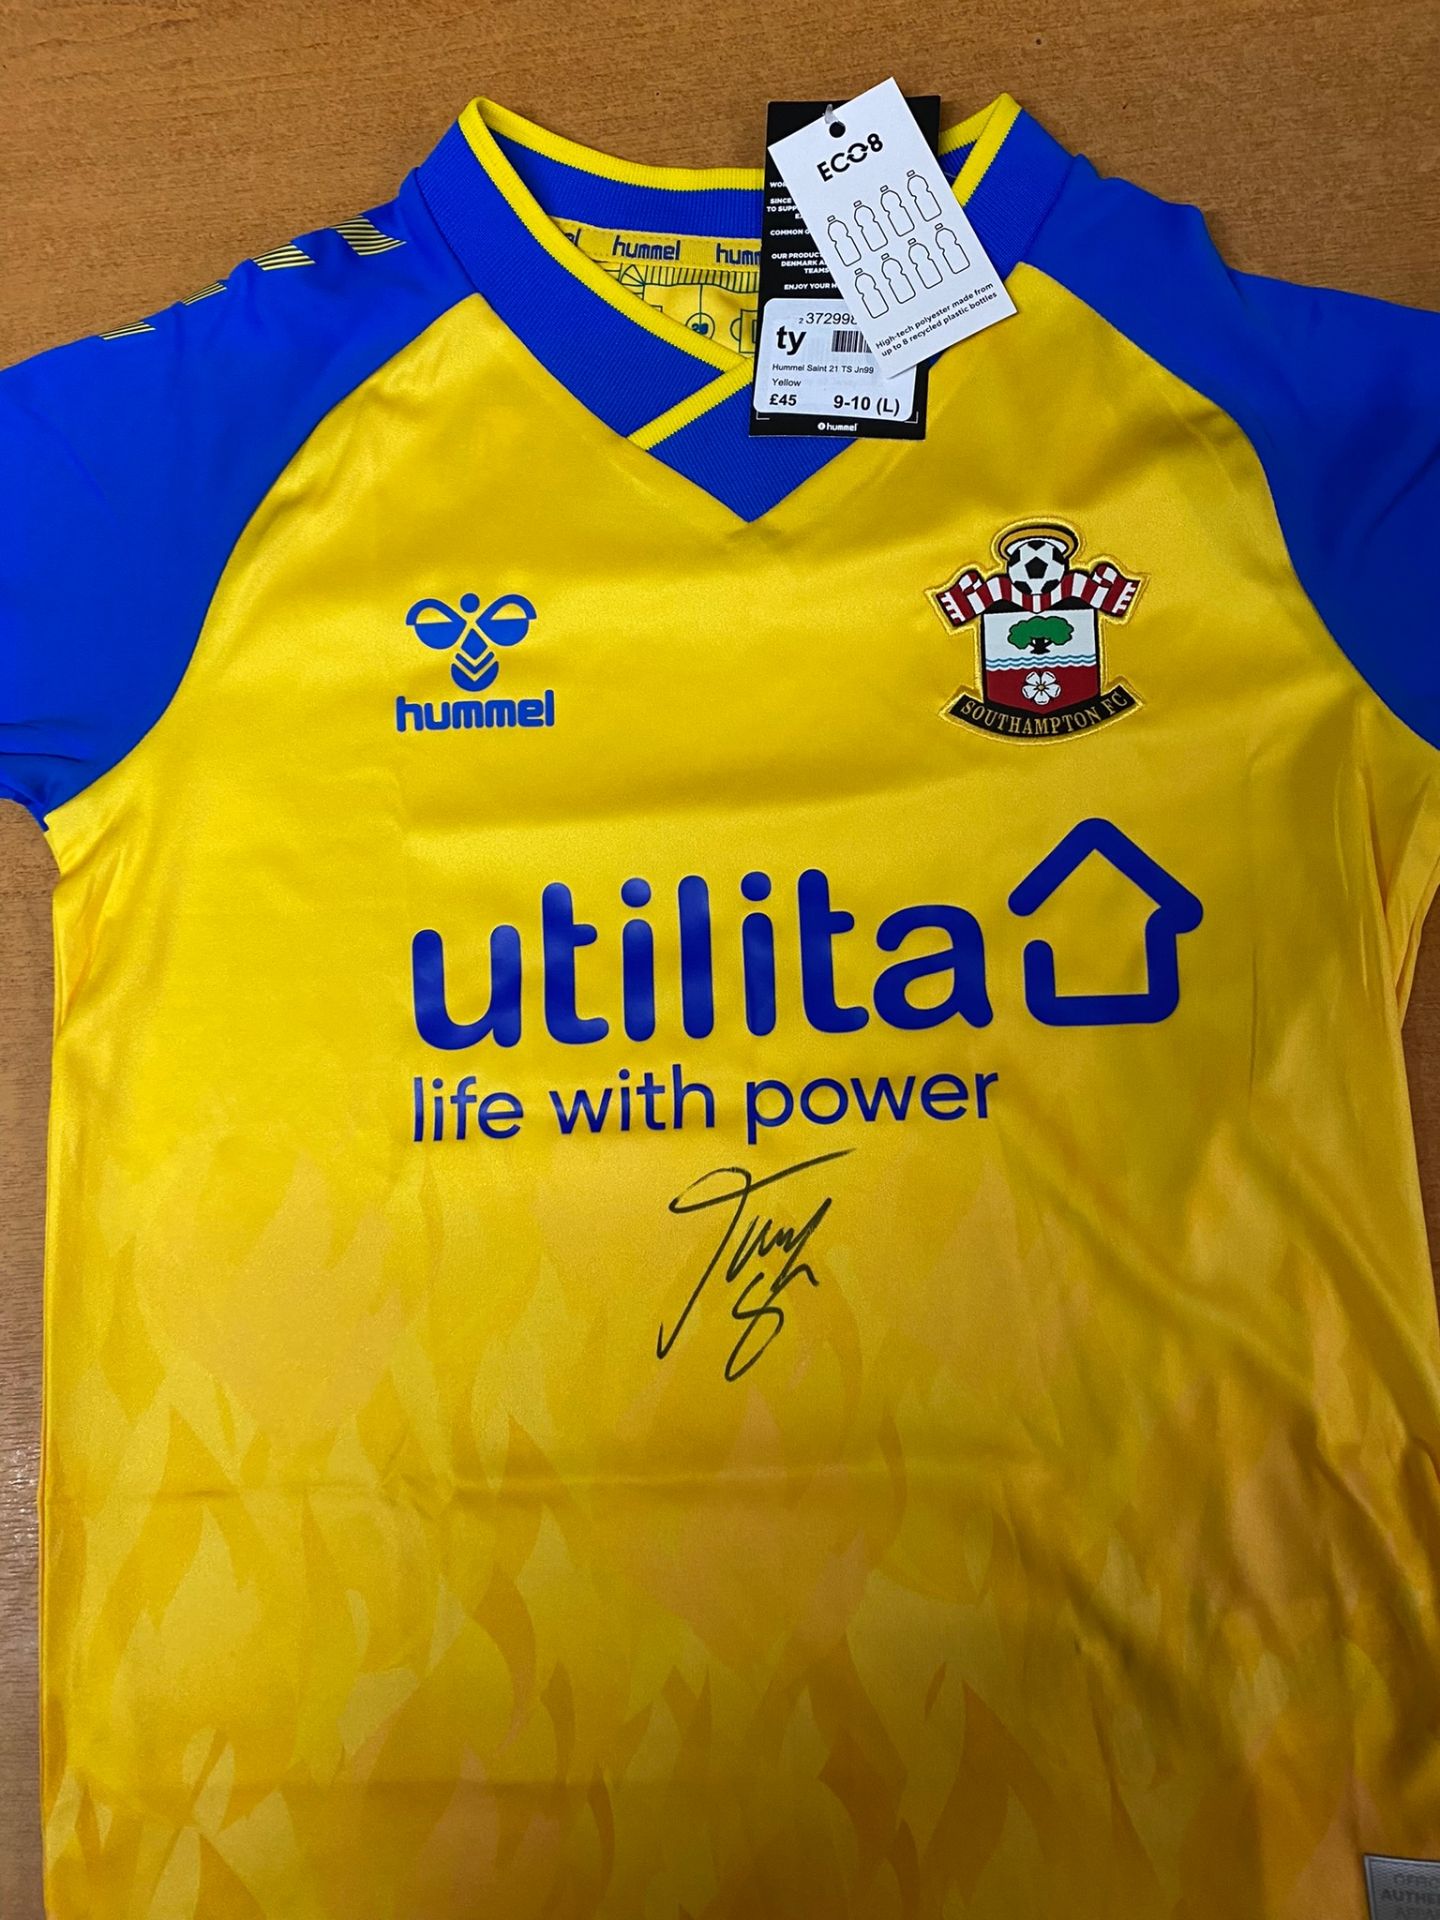 James Ward - Prowse Southampton Signed Shirt - Image 2 of 4